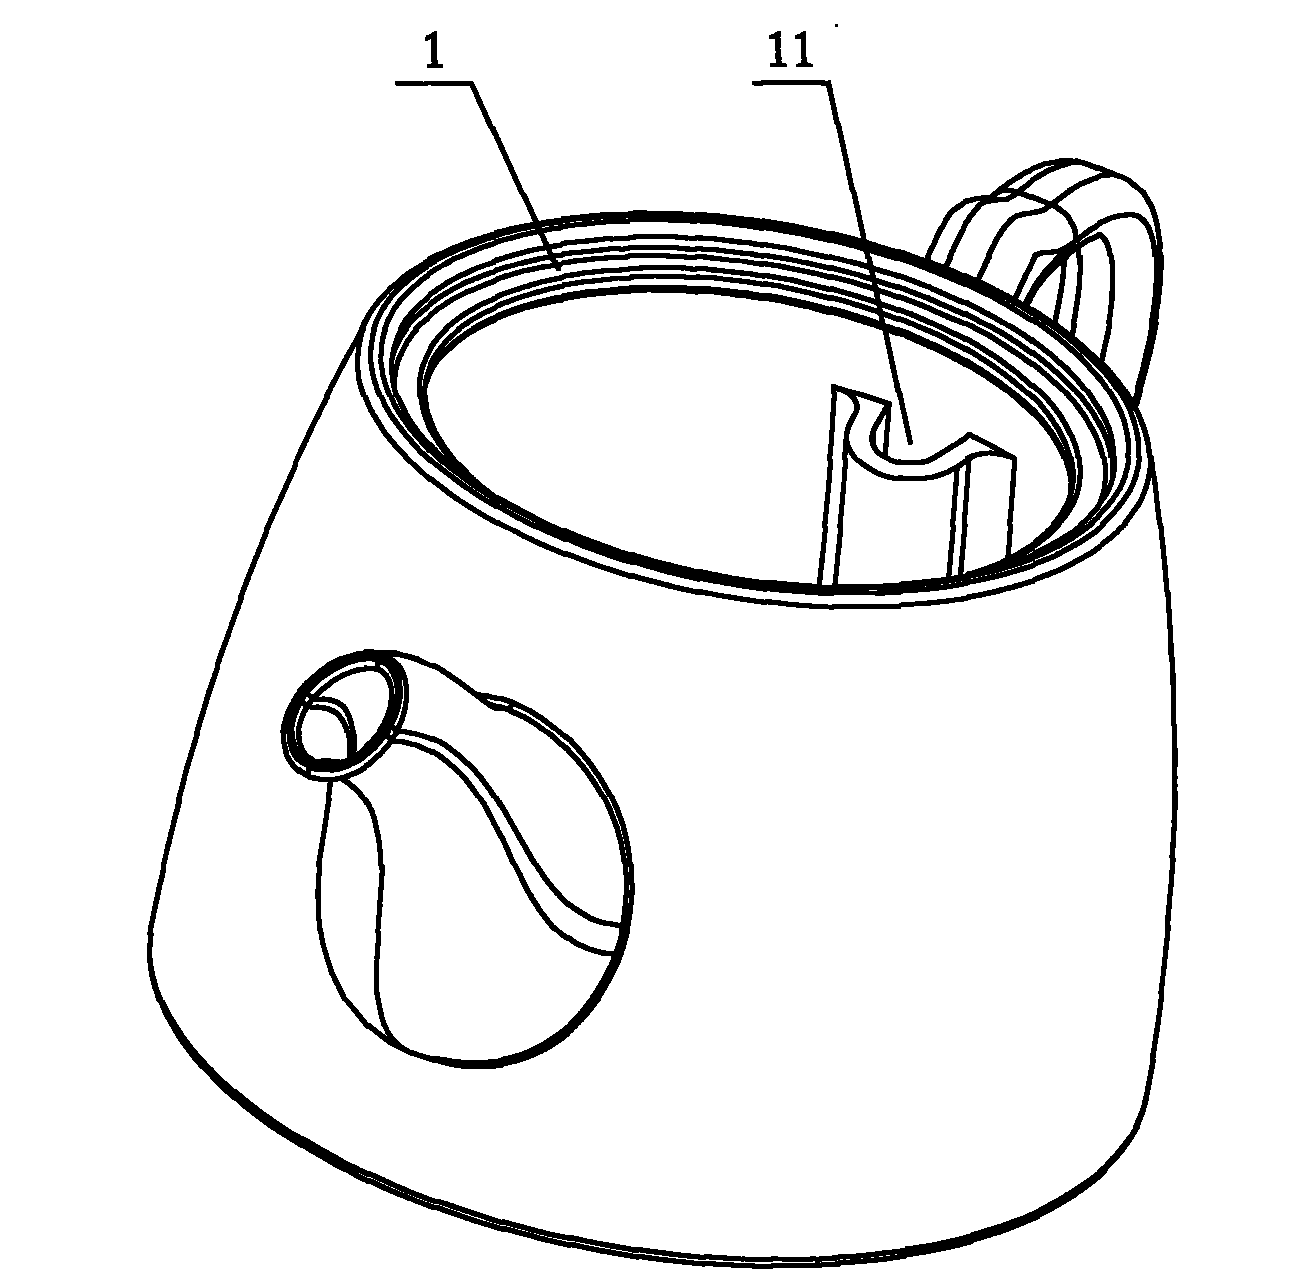 Electric ceramic kettle